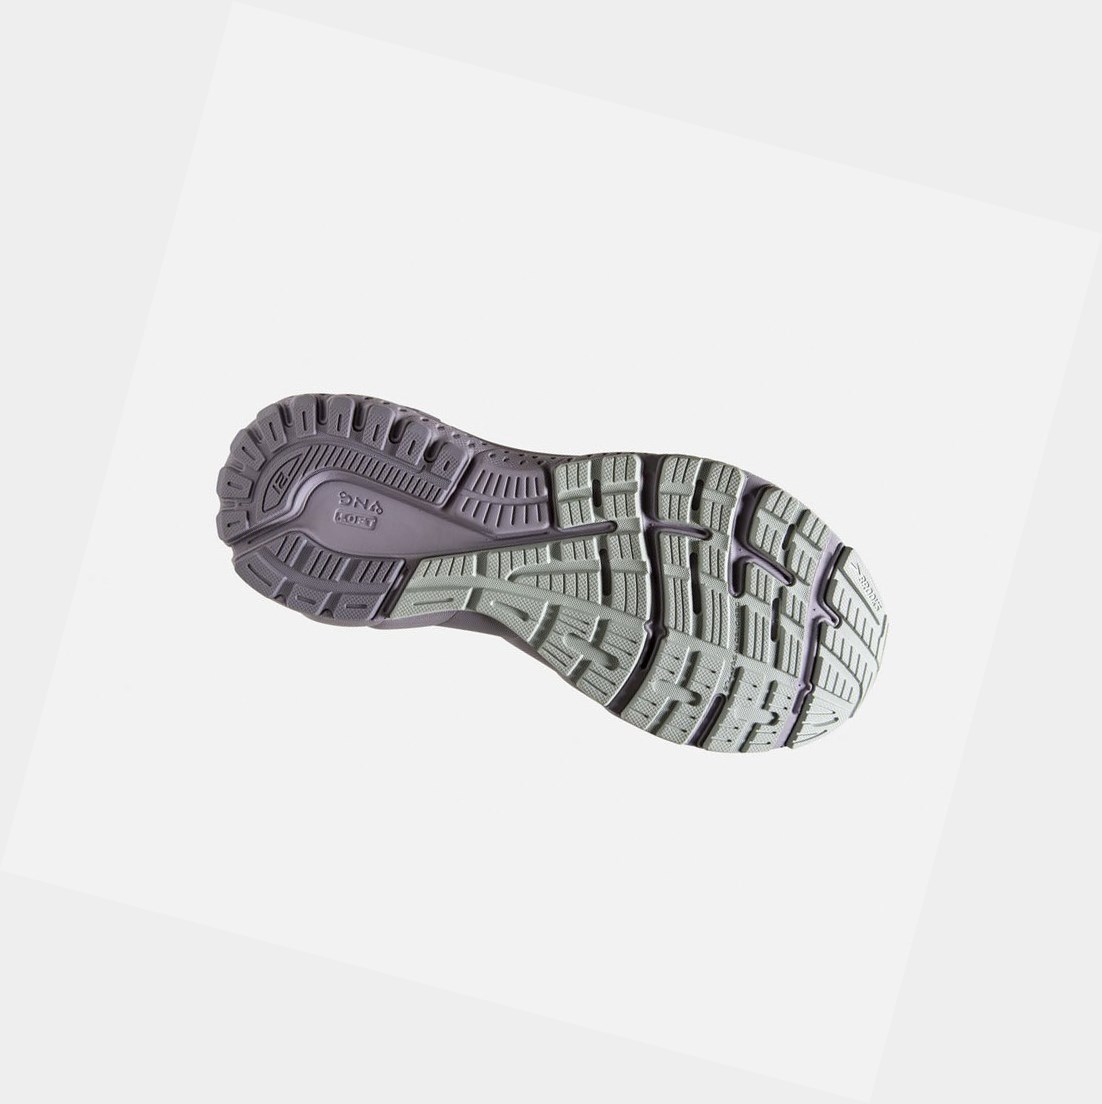 Brooks Adrenaline GTS 21 Women's Road Running Shoes Wood Violet / Lavender / Blue | MDZG-64735